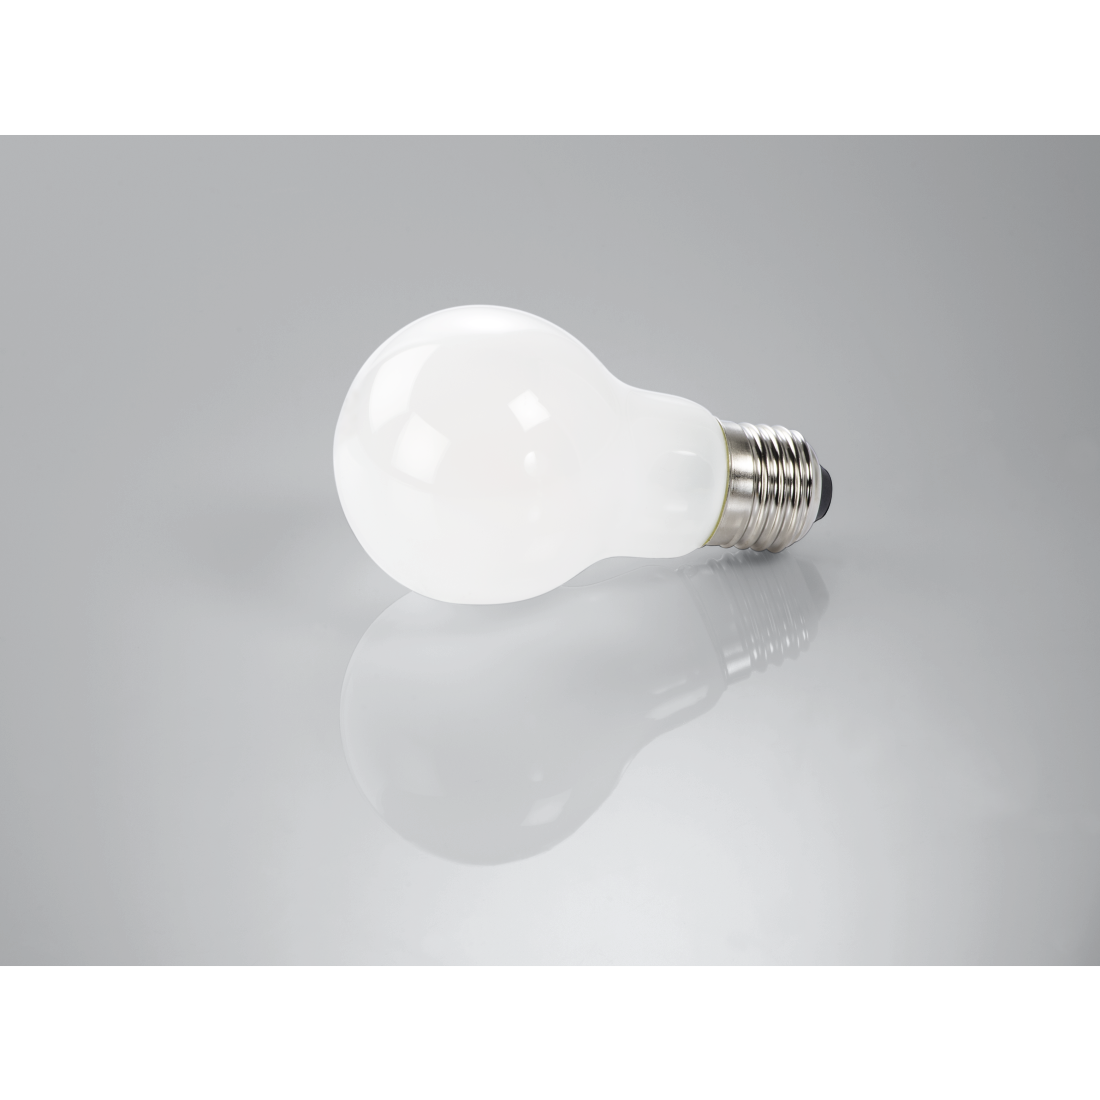 abx3 High-Res Image 3 - Xavax, LED Filament, E27, 470 lm Replaces 40W, Incandescent Bulb, Matt, warm white